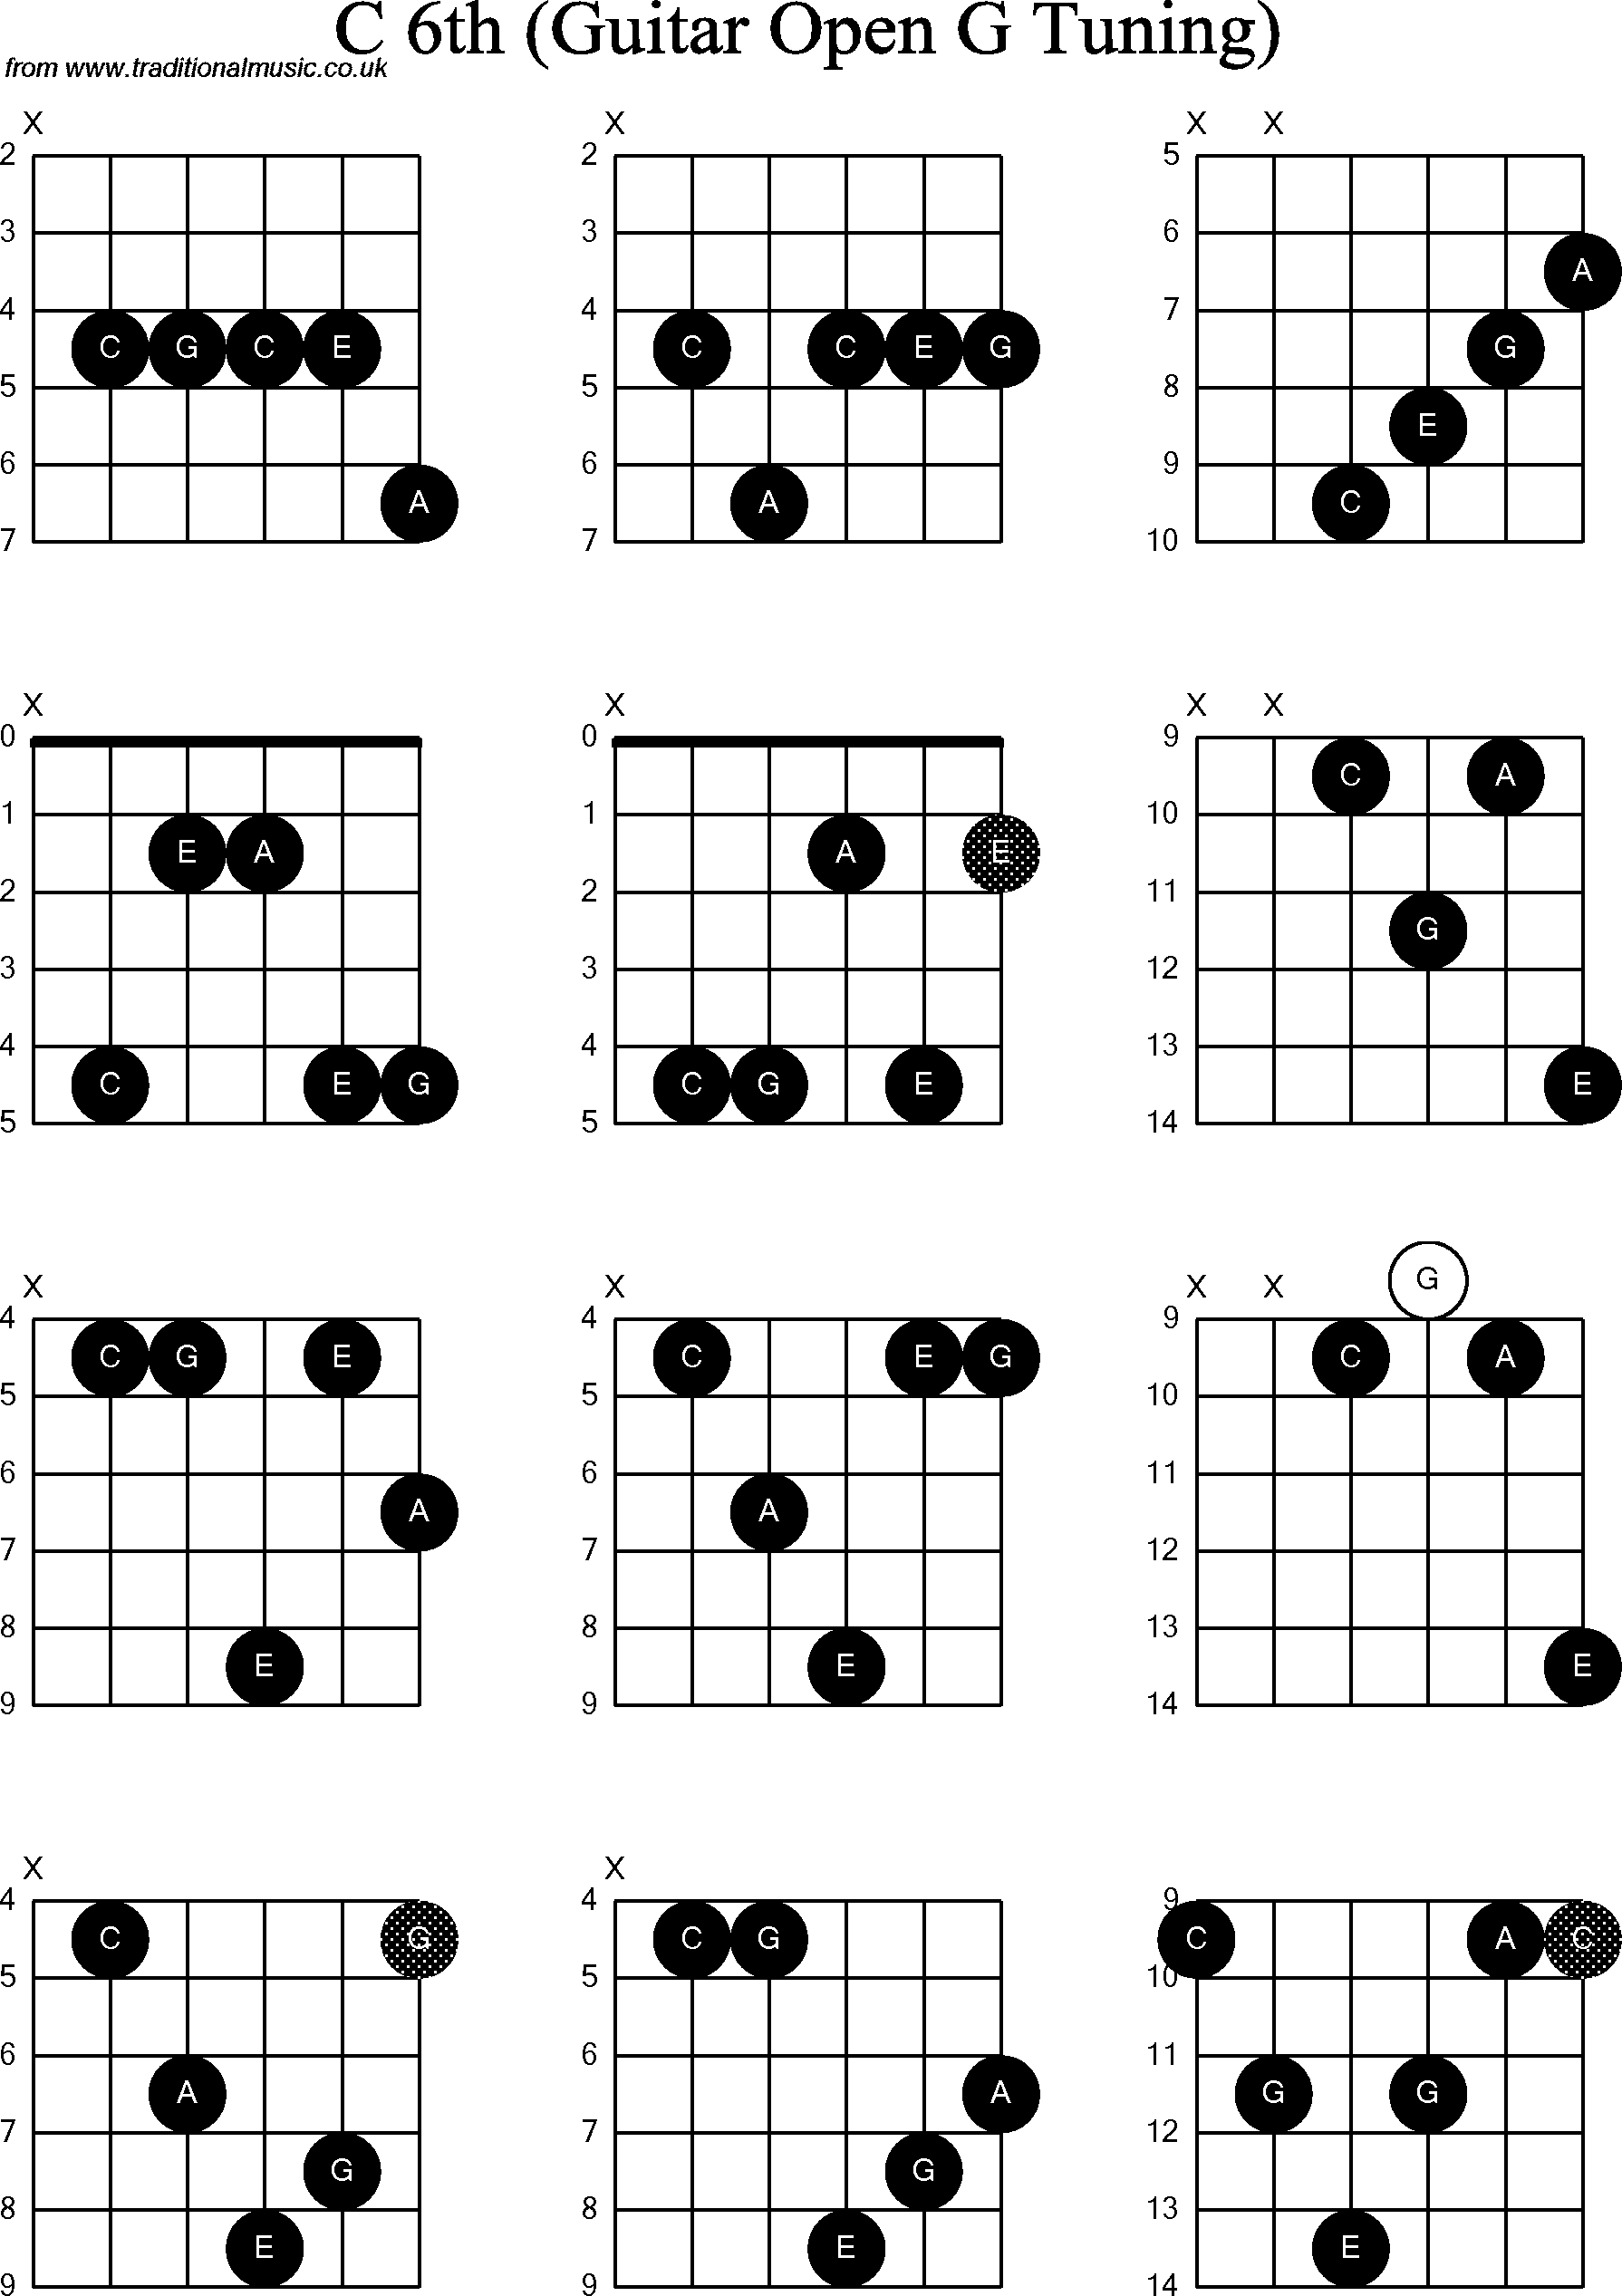 Chord diagrams for: Dobro C6th